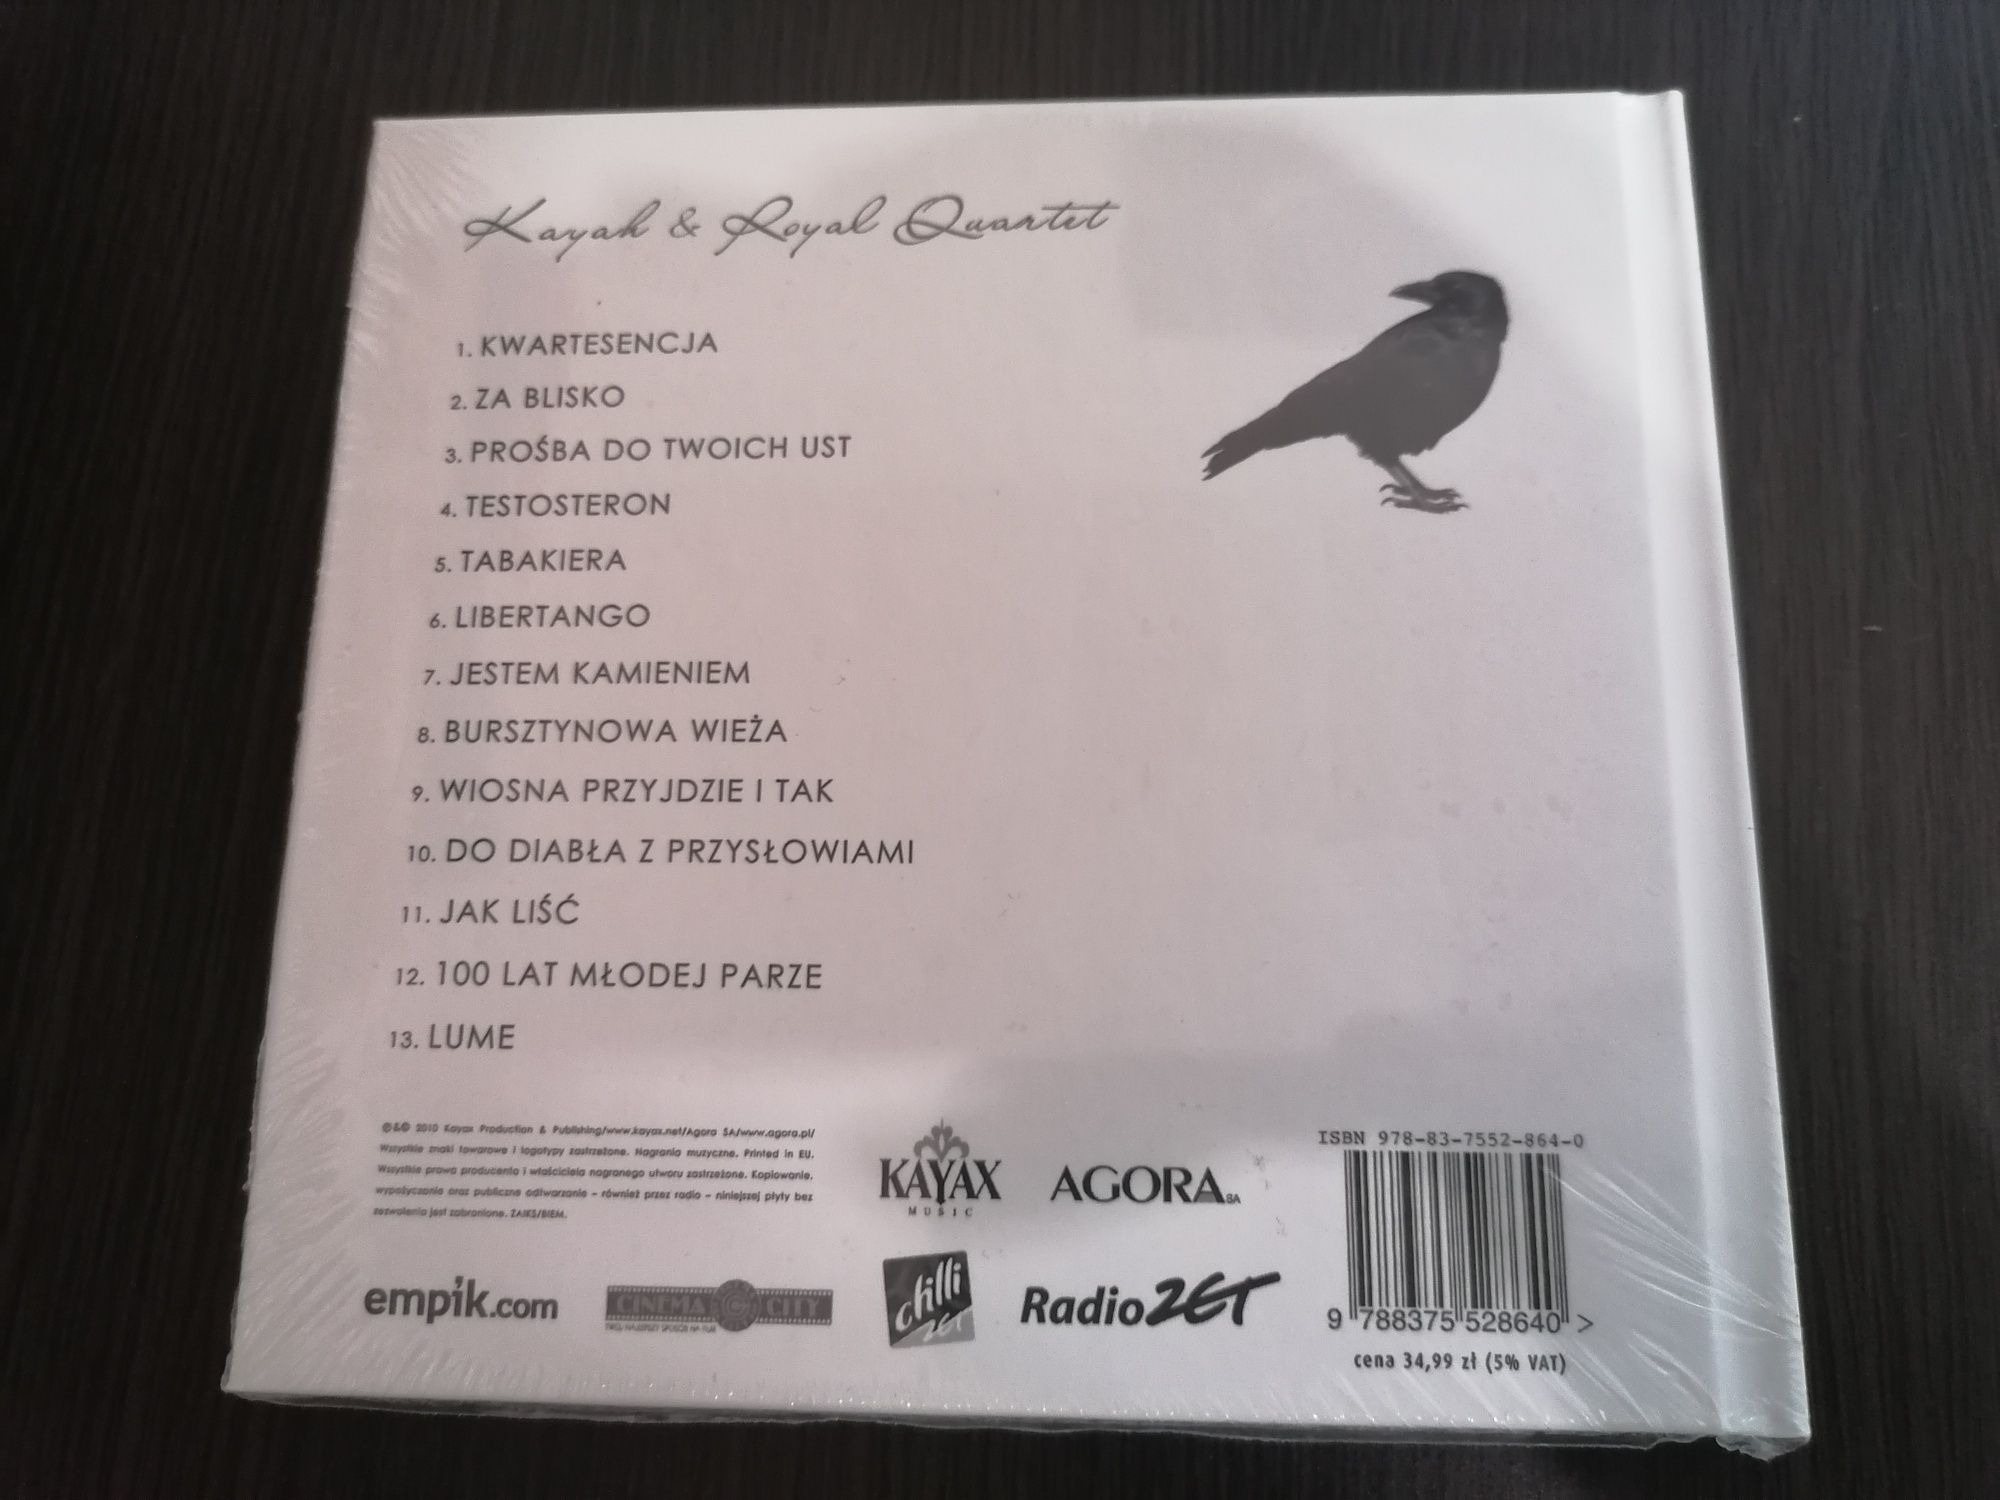 Nowa płyta Kayah & Royal Quartet CD FOLIA